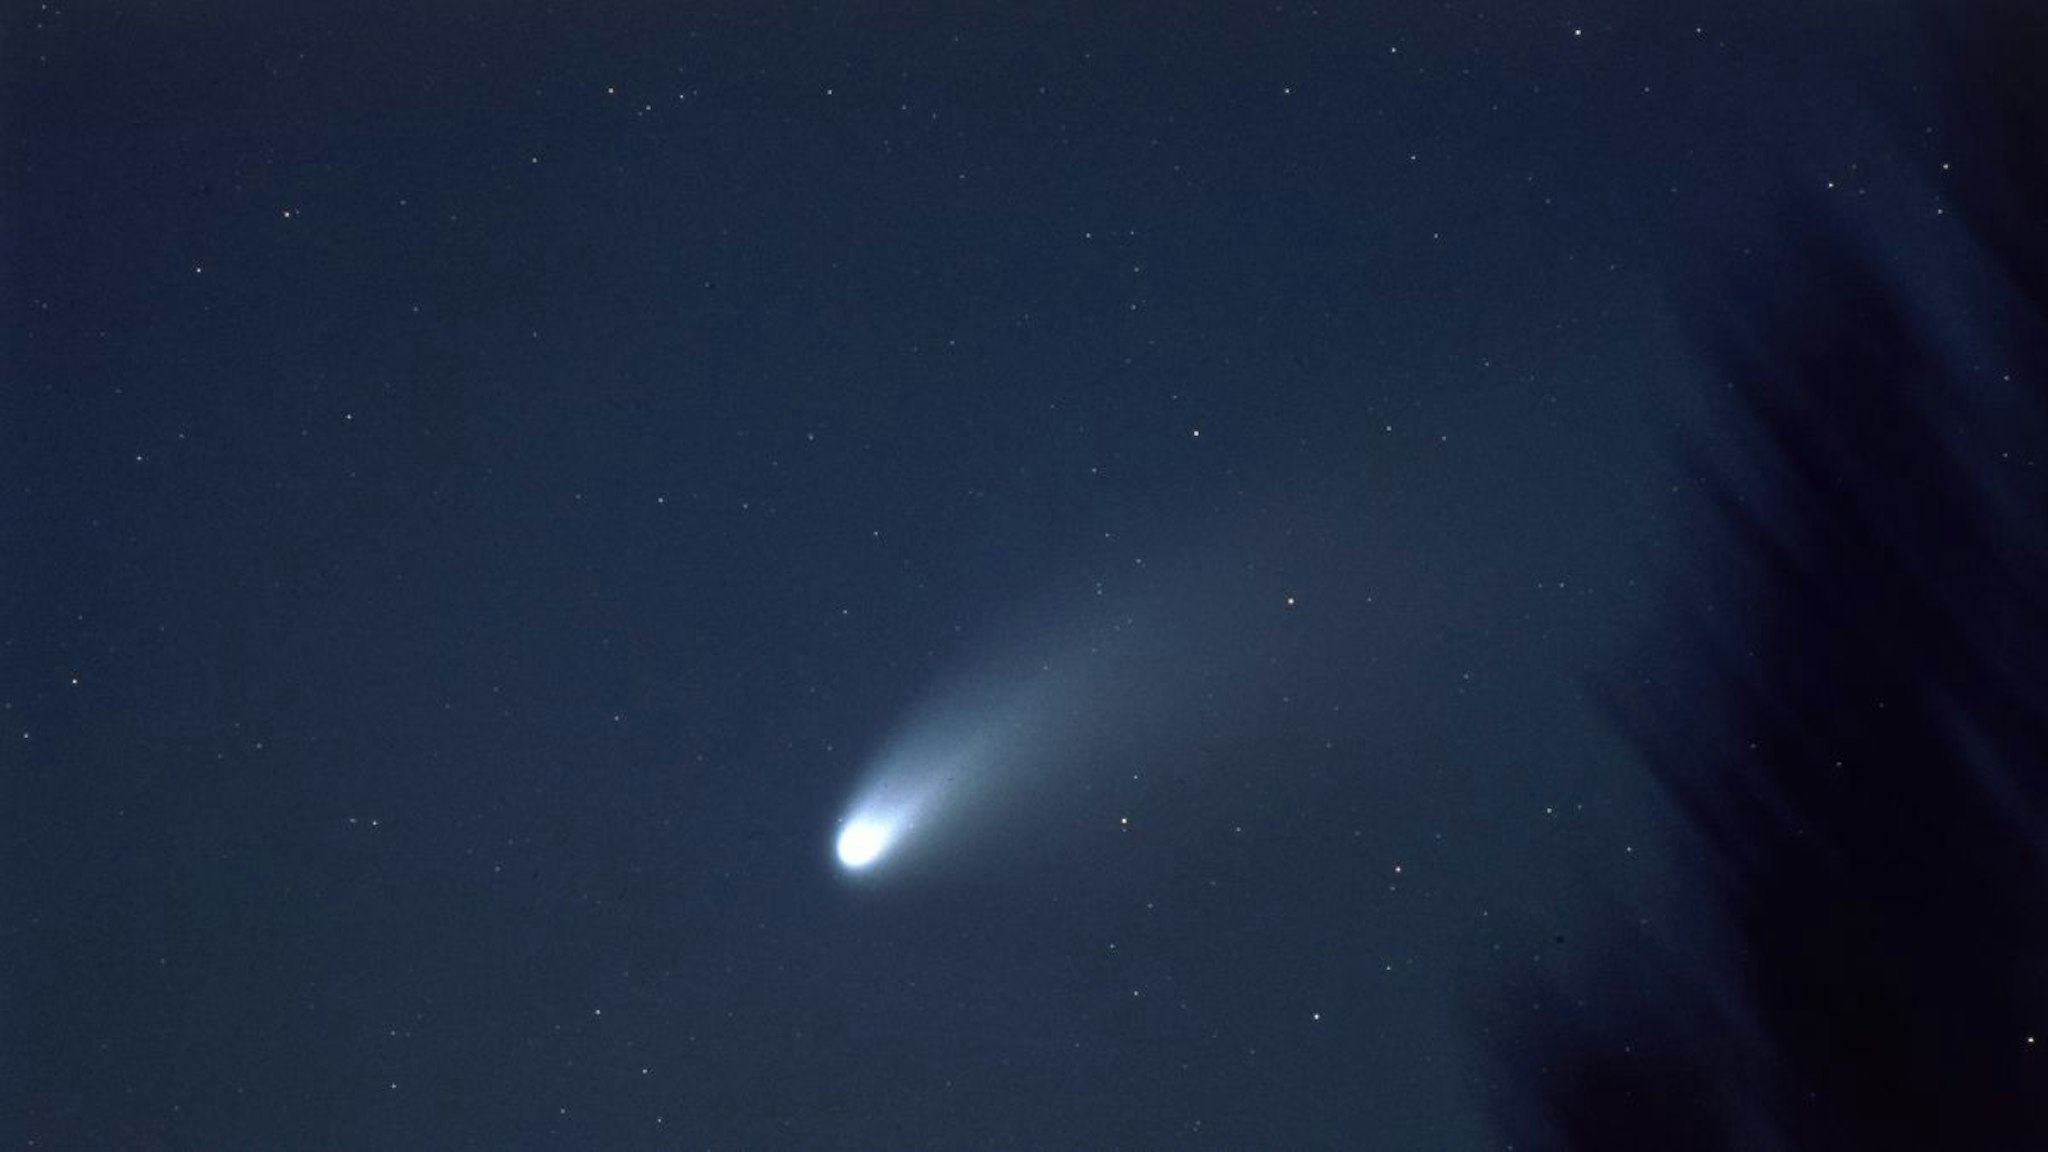 The Comet Hale-Bopp passes across the night sky, 1997.